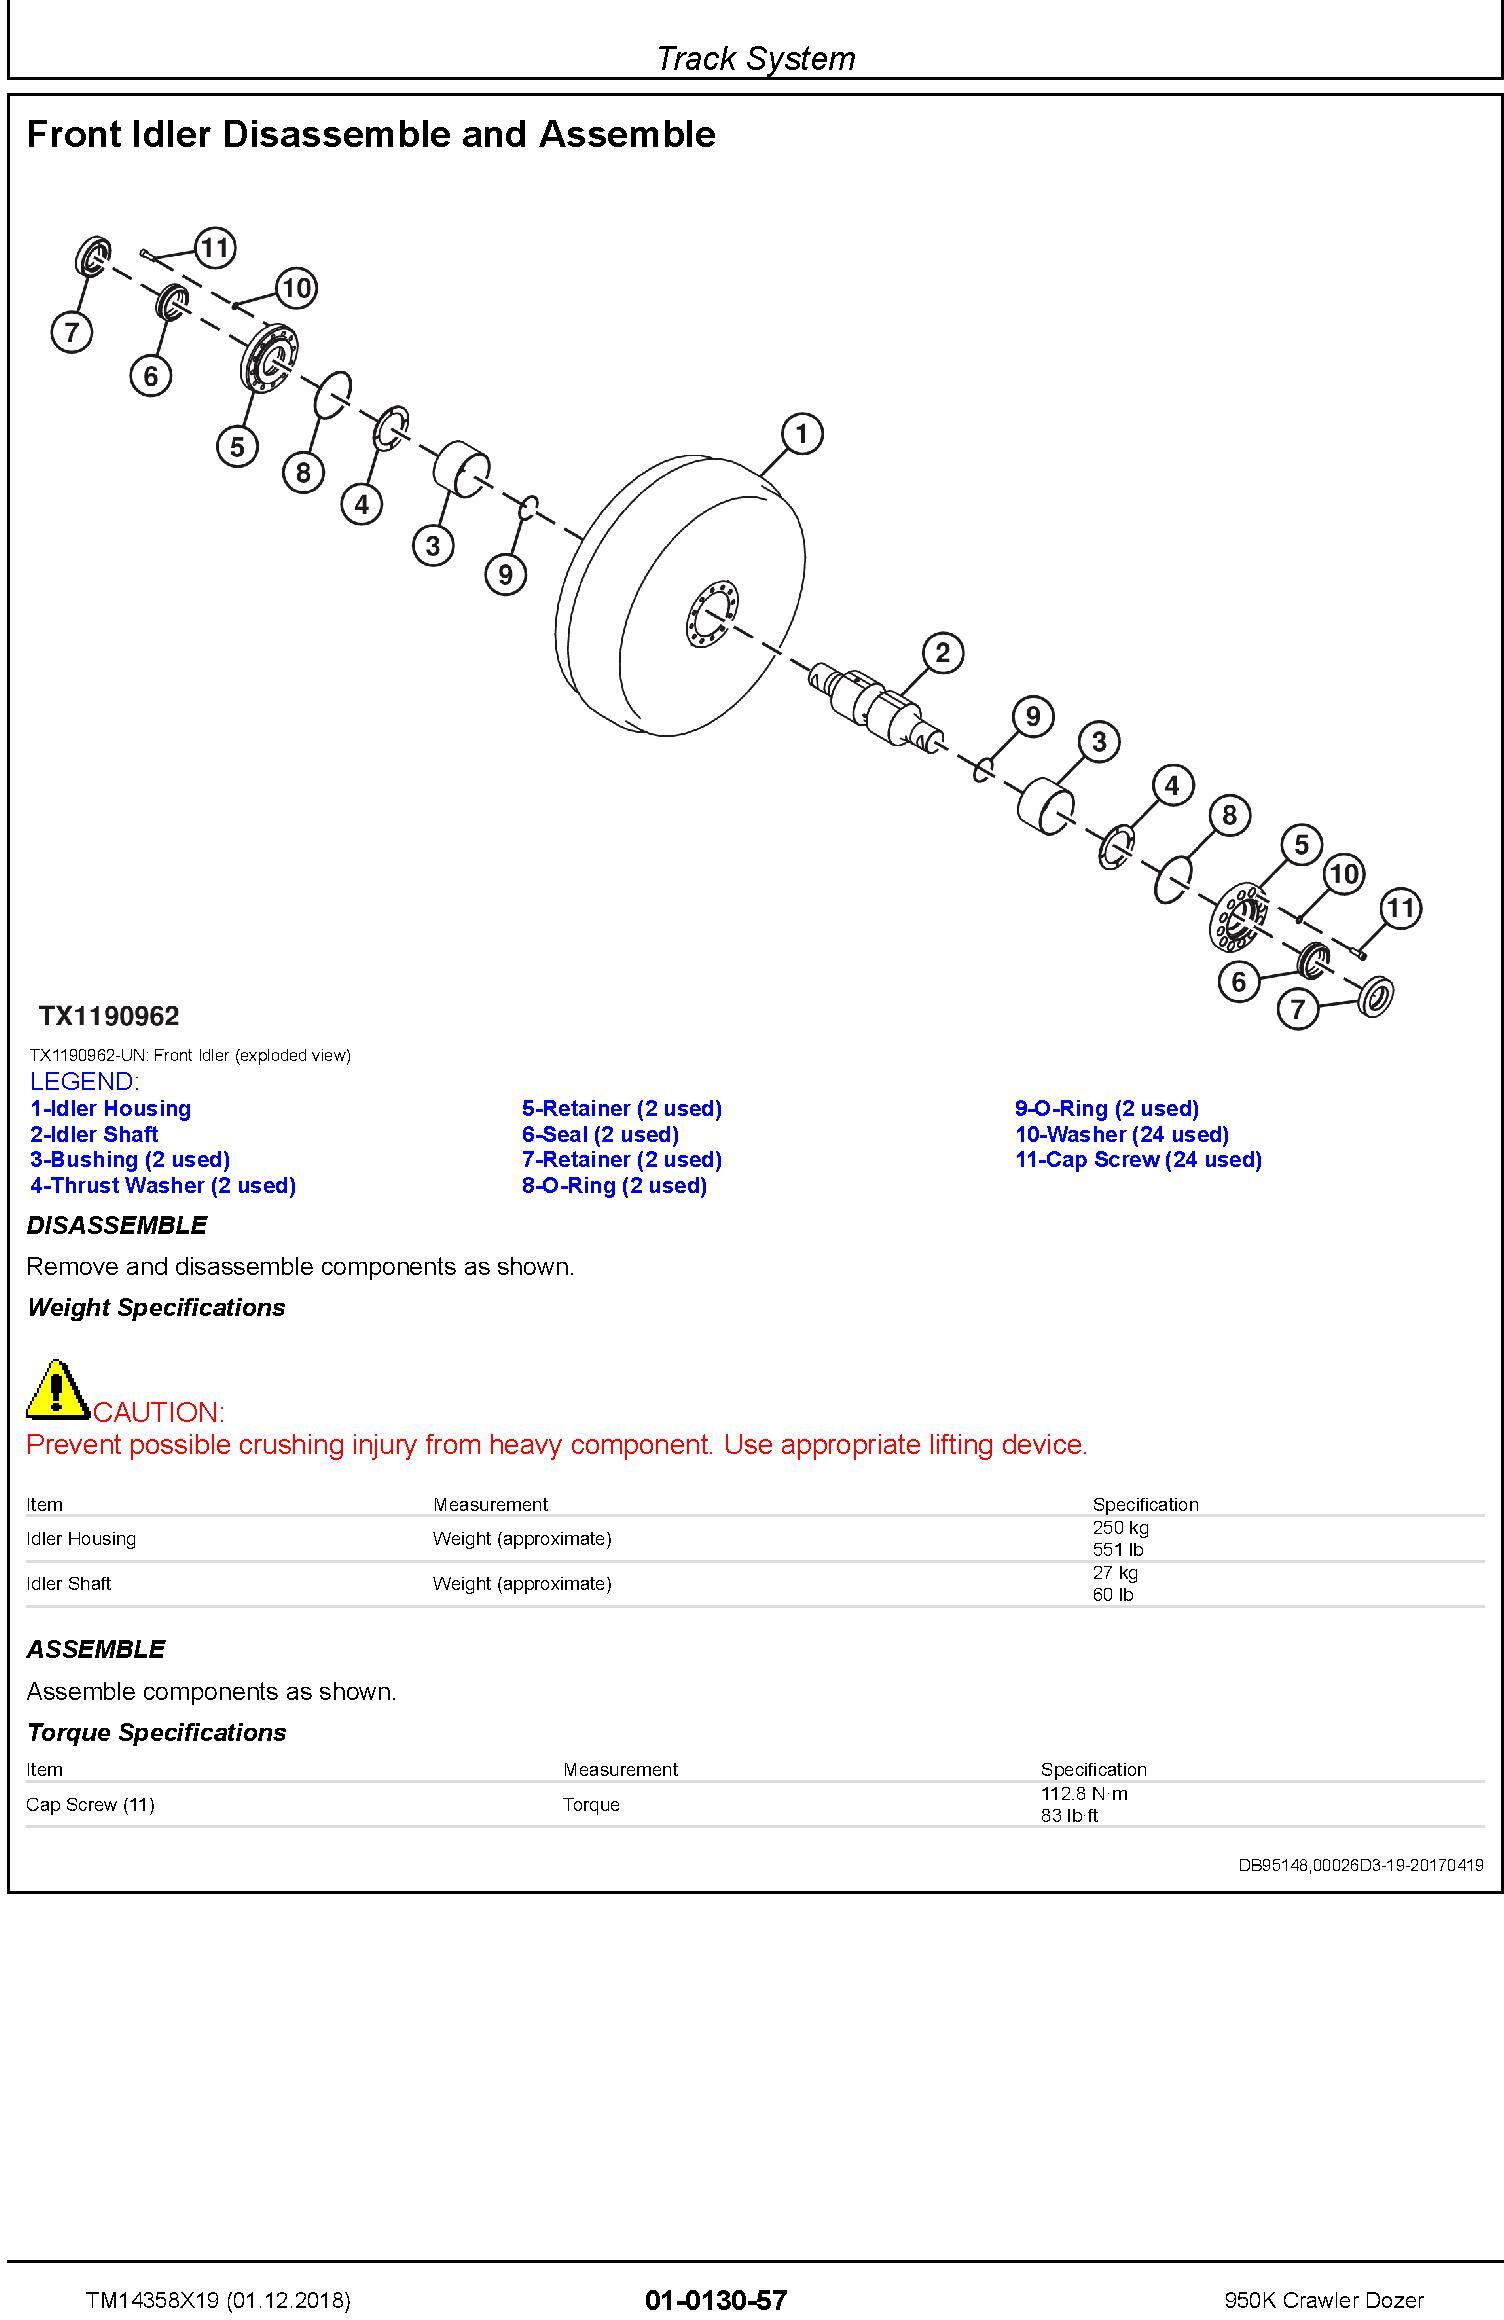 John Deere 950K Crawler Dozer Repair Technical Manual (TM14358X19) - 3